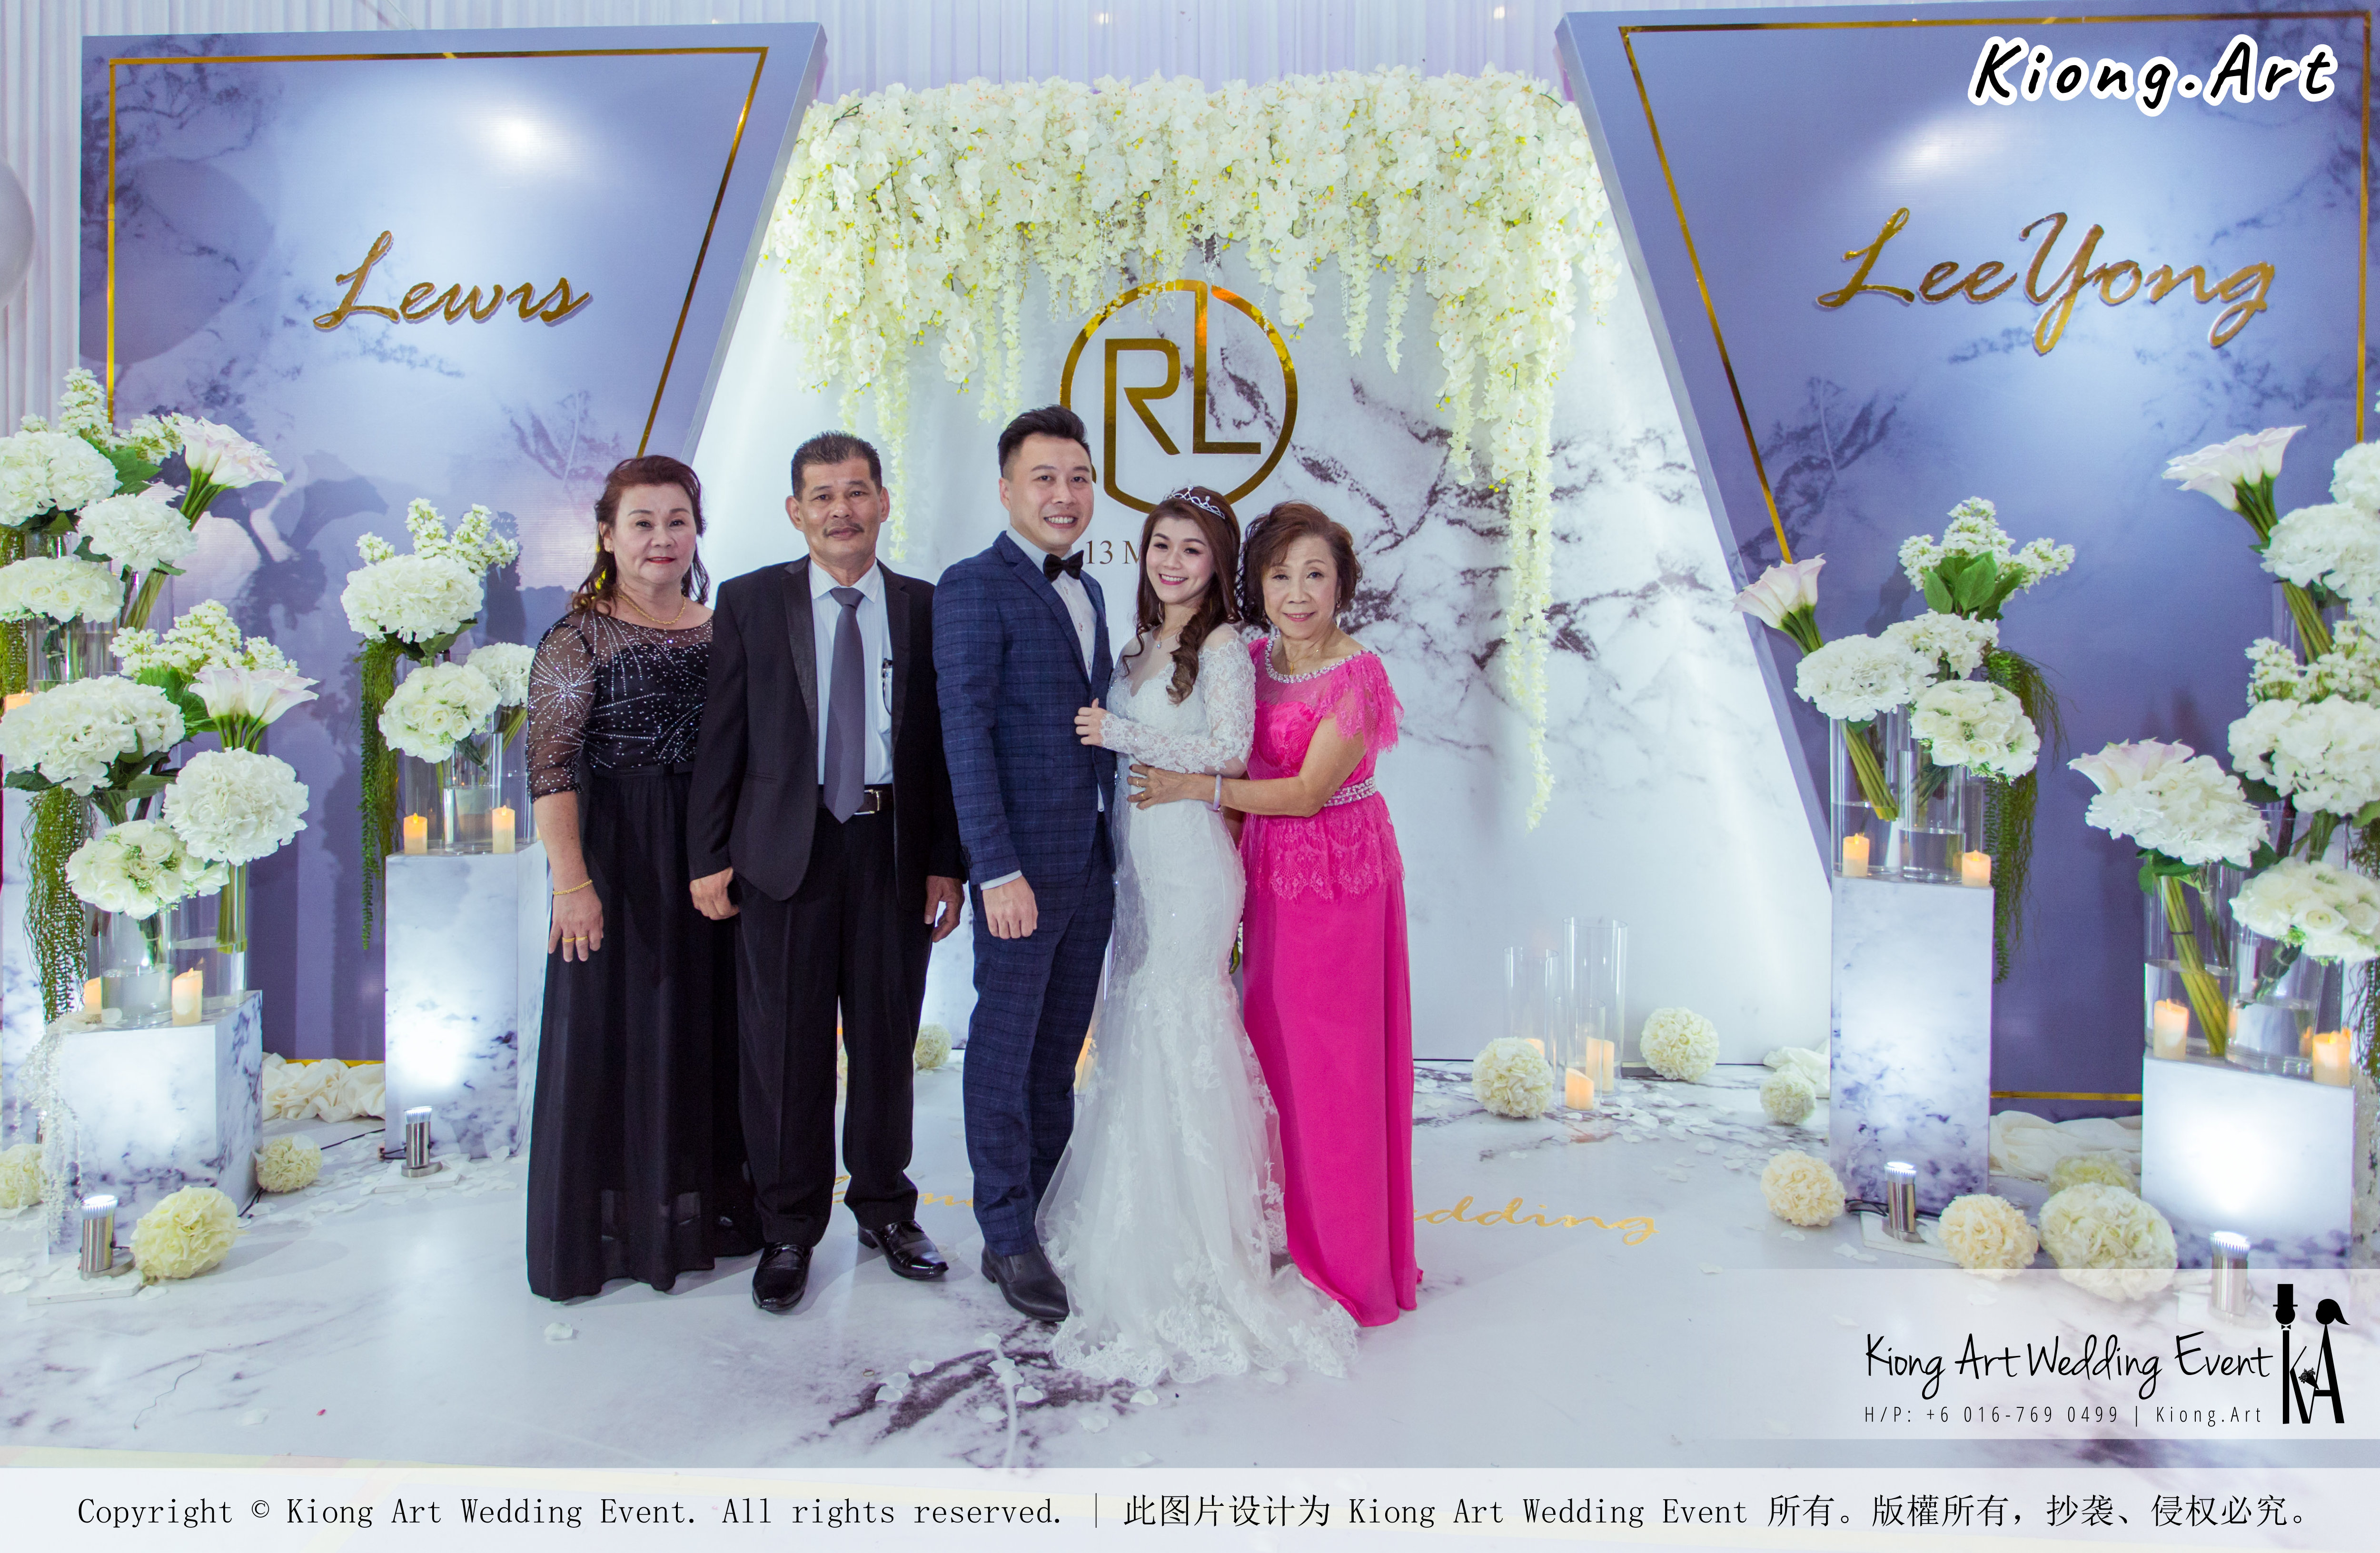 Kiong Art Wedding Event Kuala Lumpur Malaysia Event and Wedding Decoration Company One-stop Wedding Planning Services Wedding Theme Live Band Wedding Photography Videography A03-56